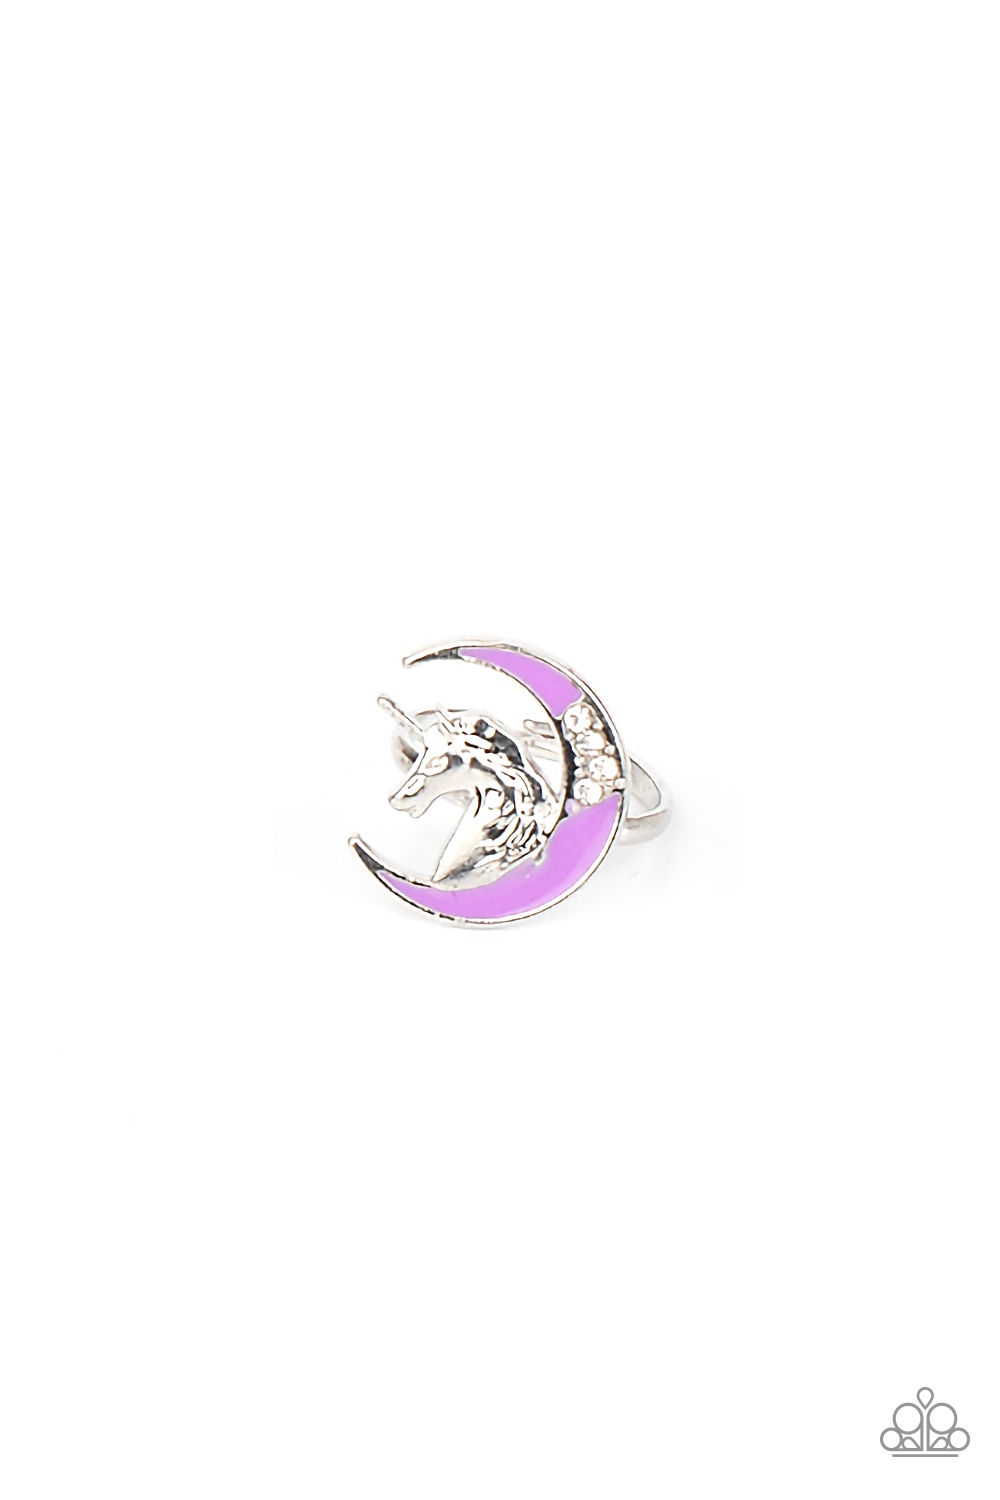 Ring - Strlt Shmr Unicorn Moon/Stone - Purple/White